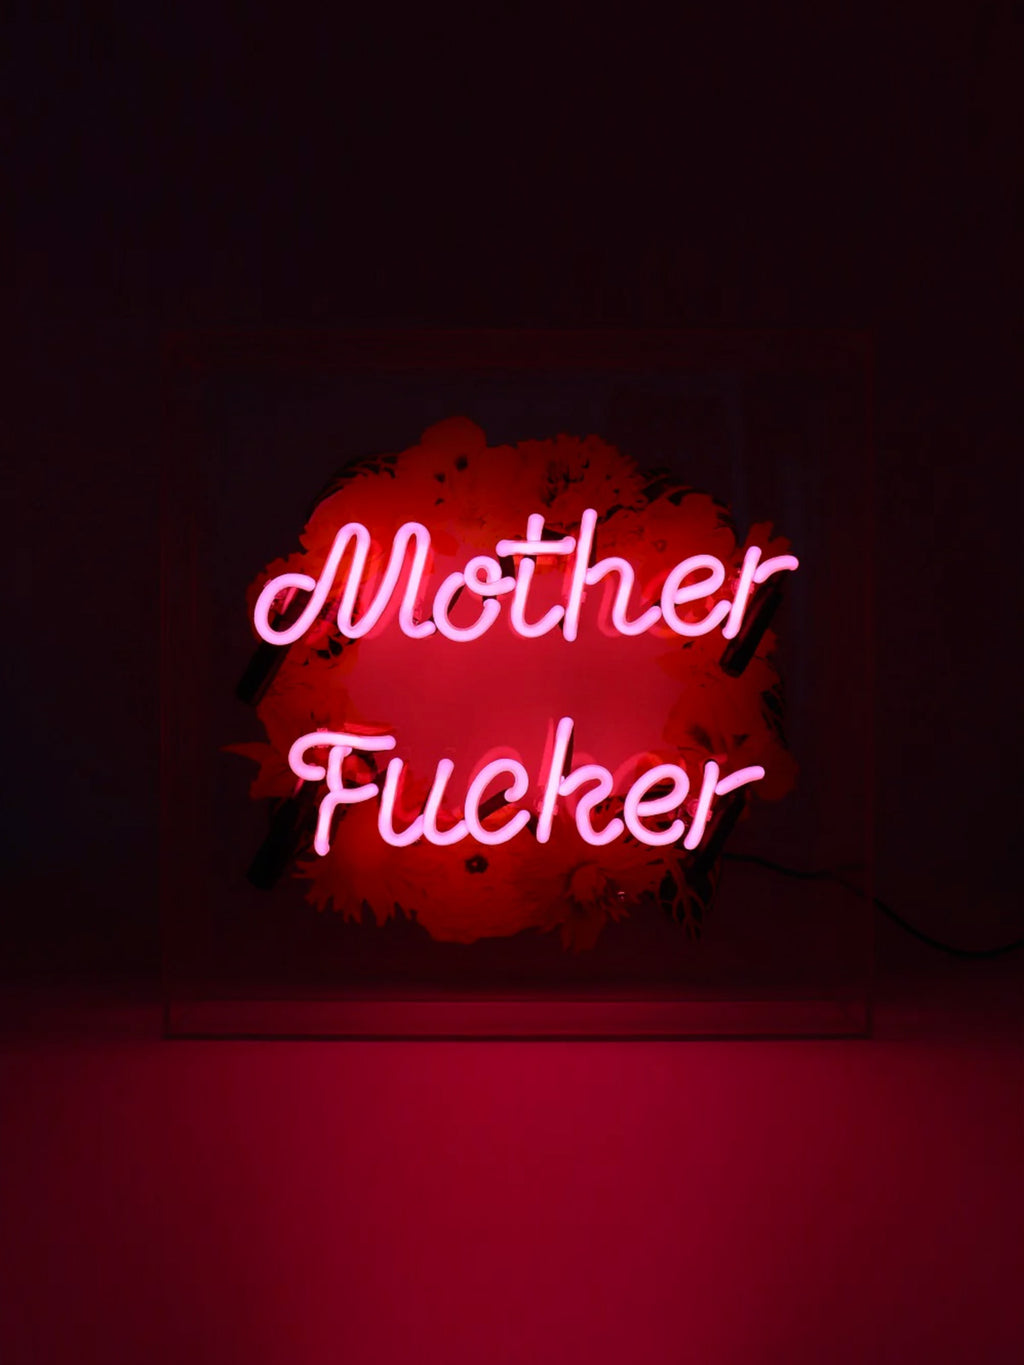 'Mother Fucker' Glass Neon Light Box - Pink